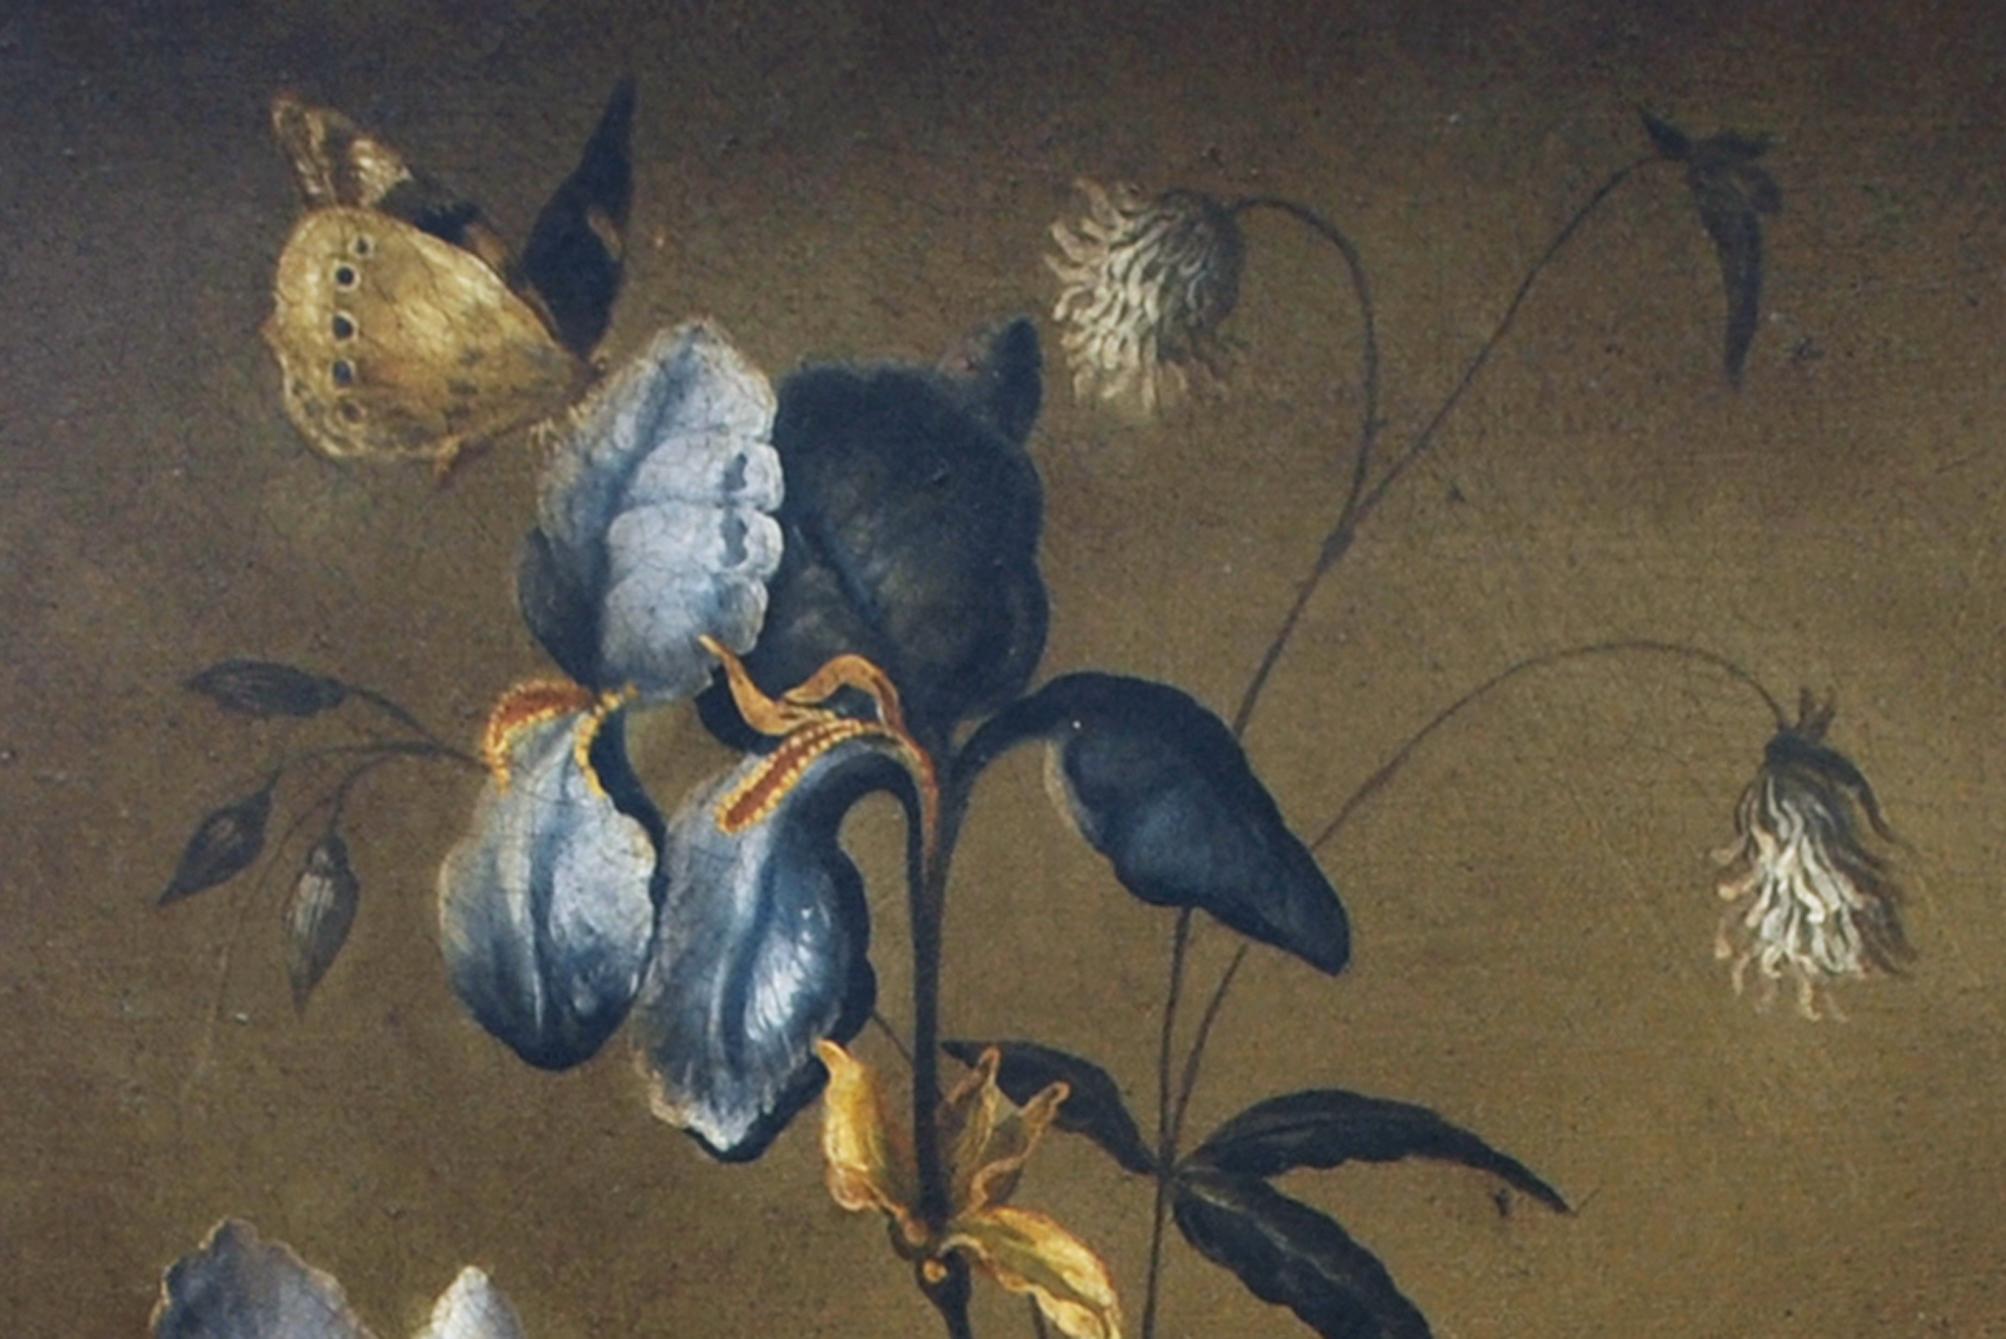 FLOWERS - Dutch SchooI -Italian Still Life Oil on Canvas Painting - Black Still-Life Painting by Carlo De Tommasi